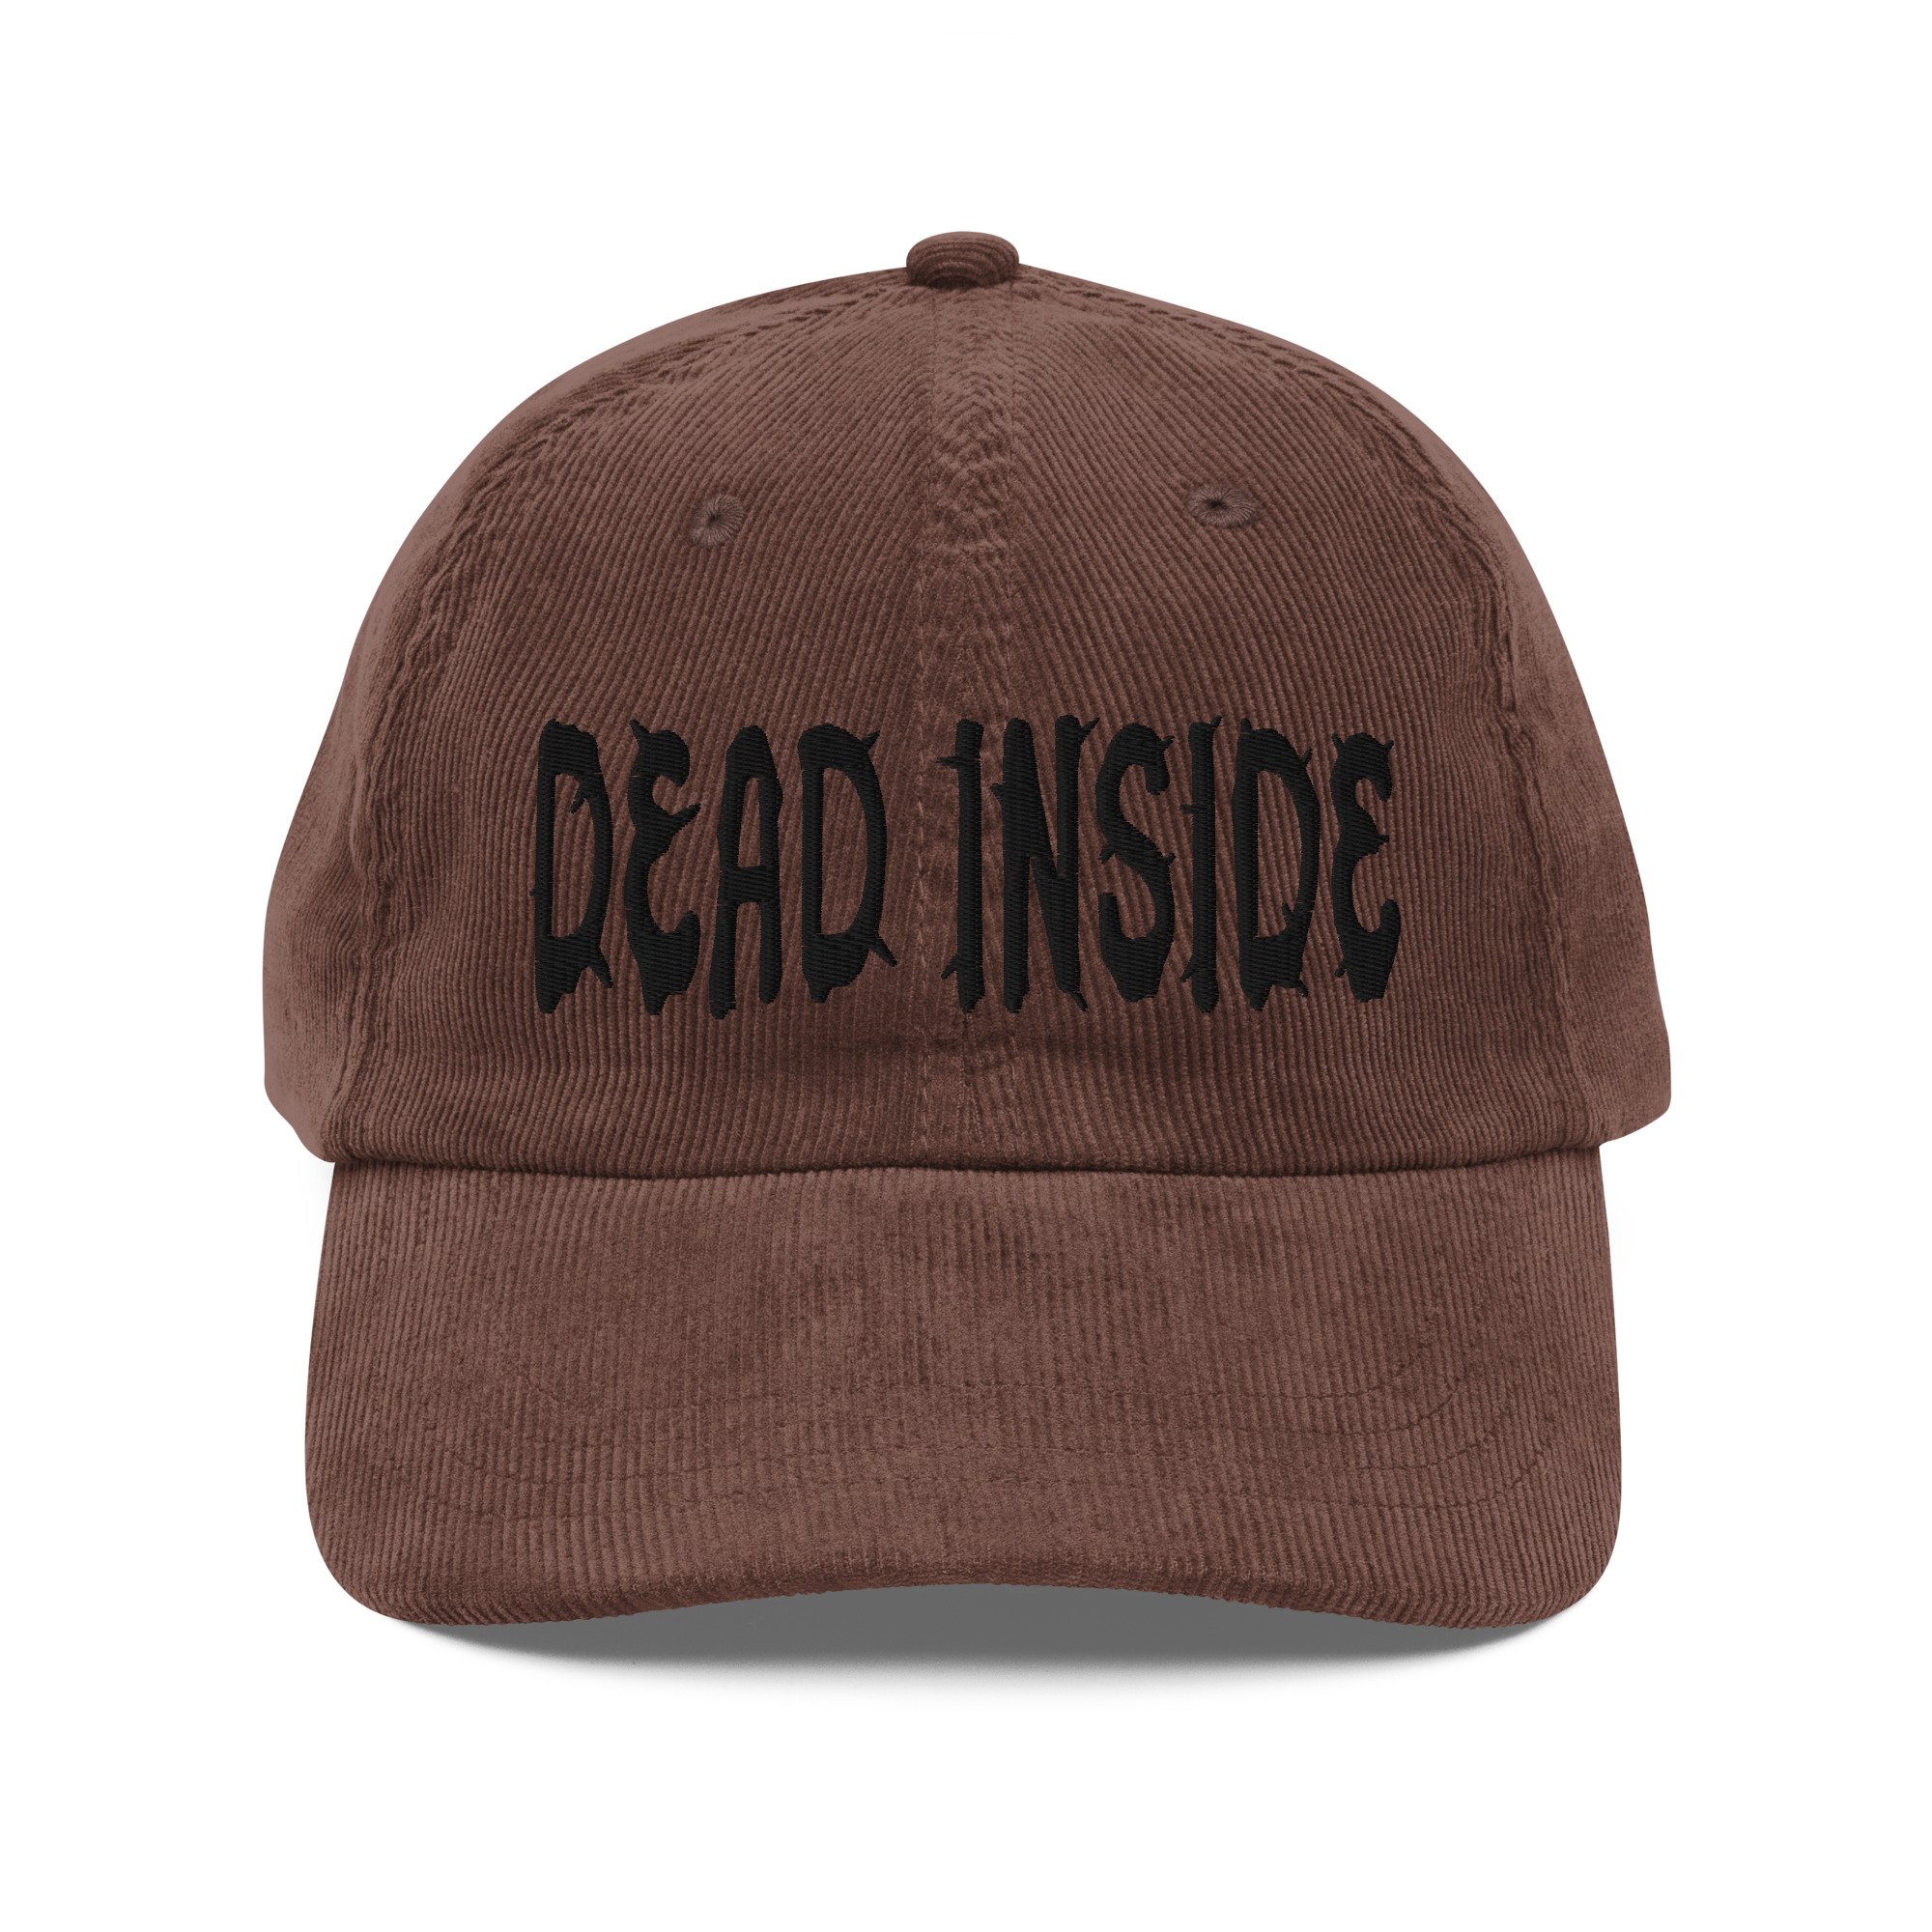 Dead Inside - Vintage corduroy cap